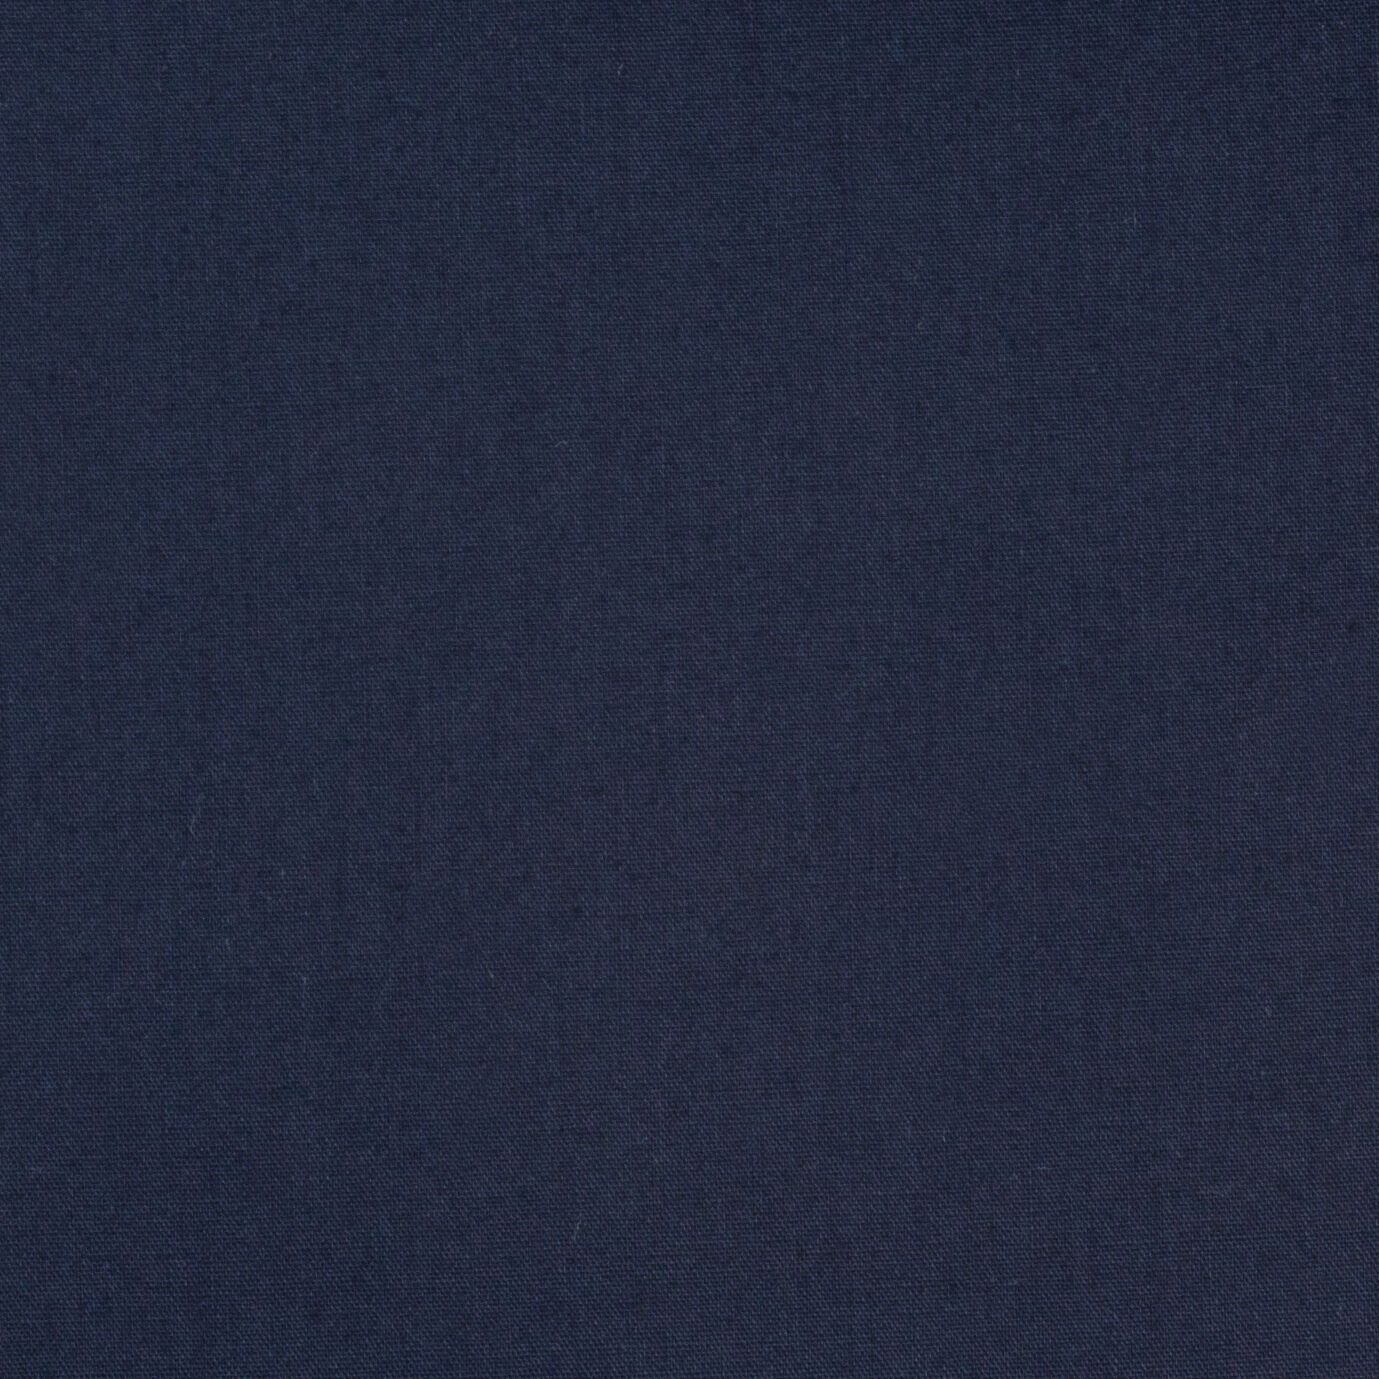 Pocketing TC6535 plain dyed good quality 110*76 navy cloth